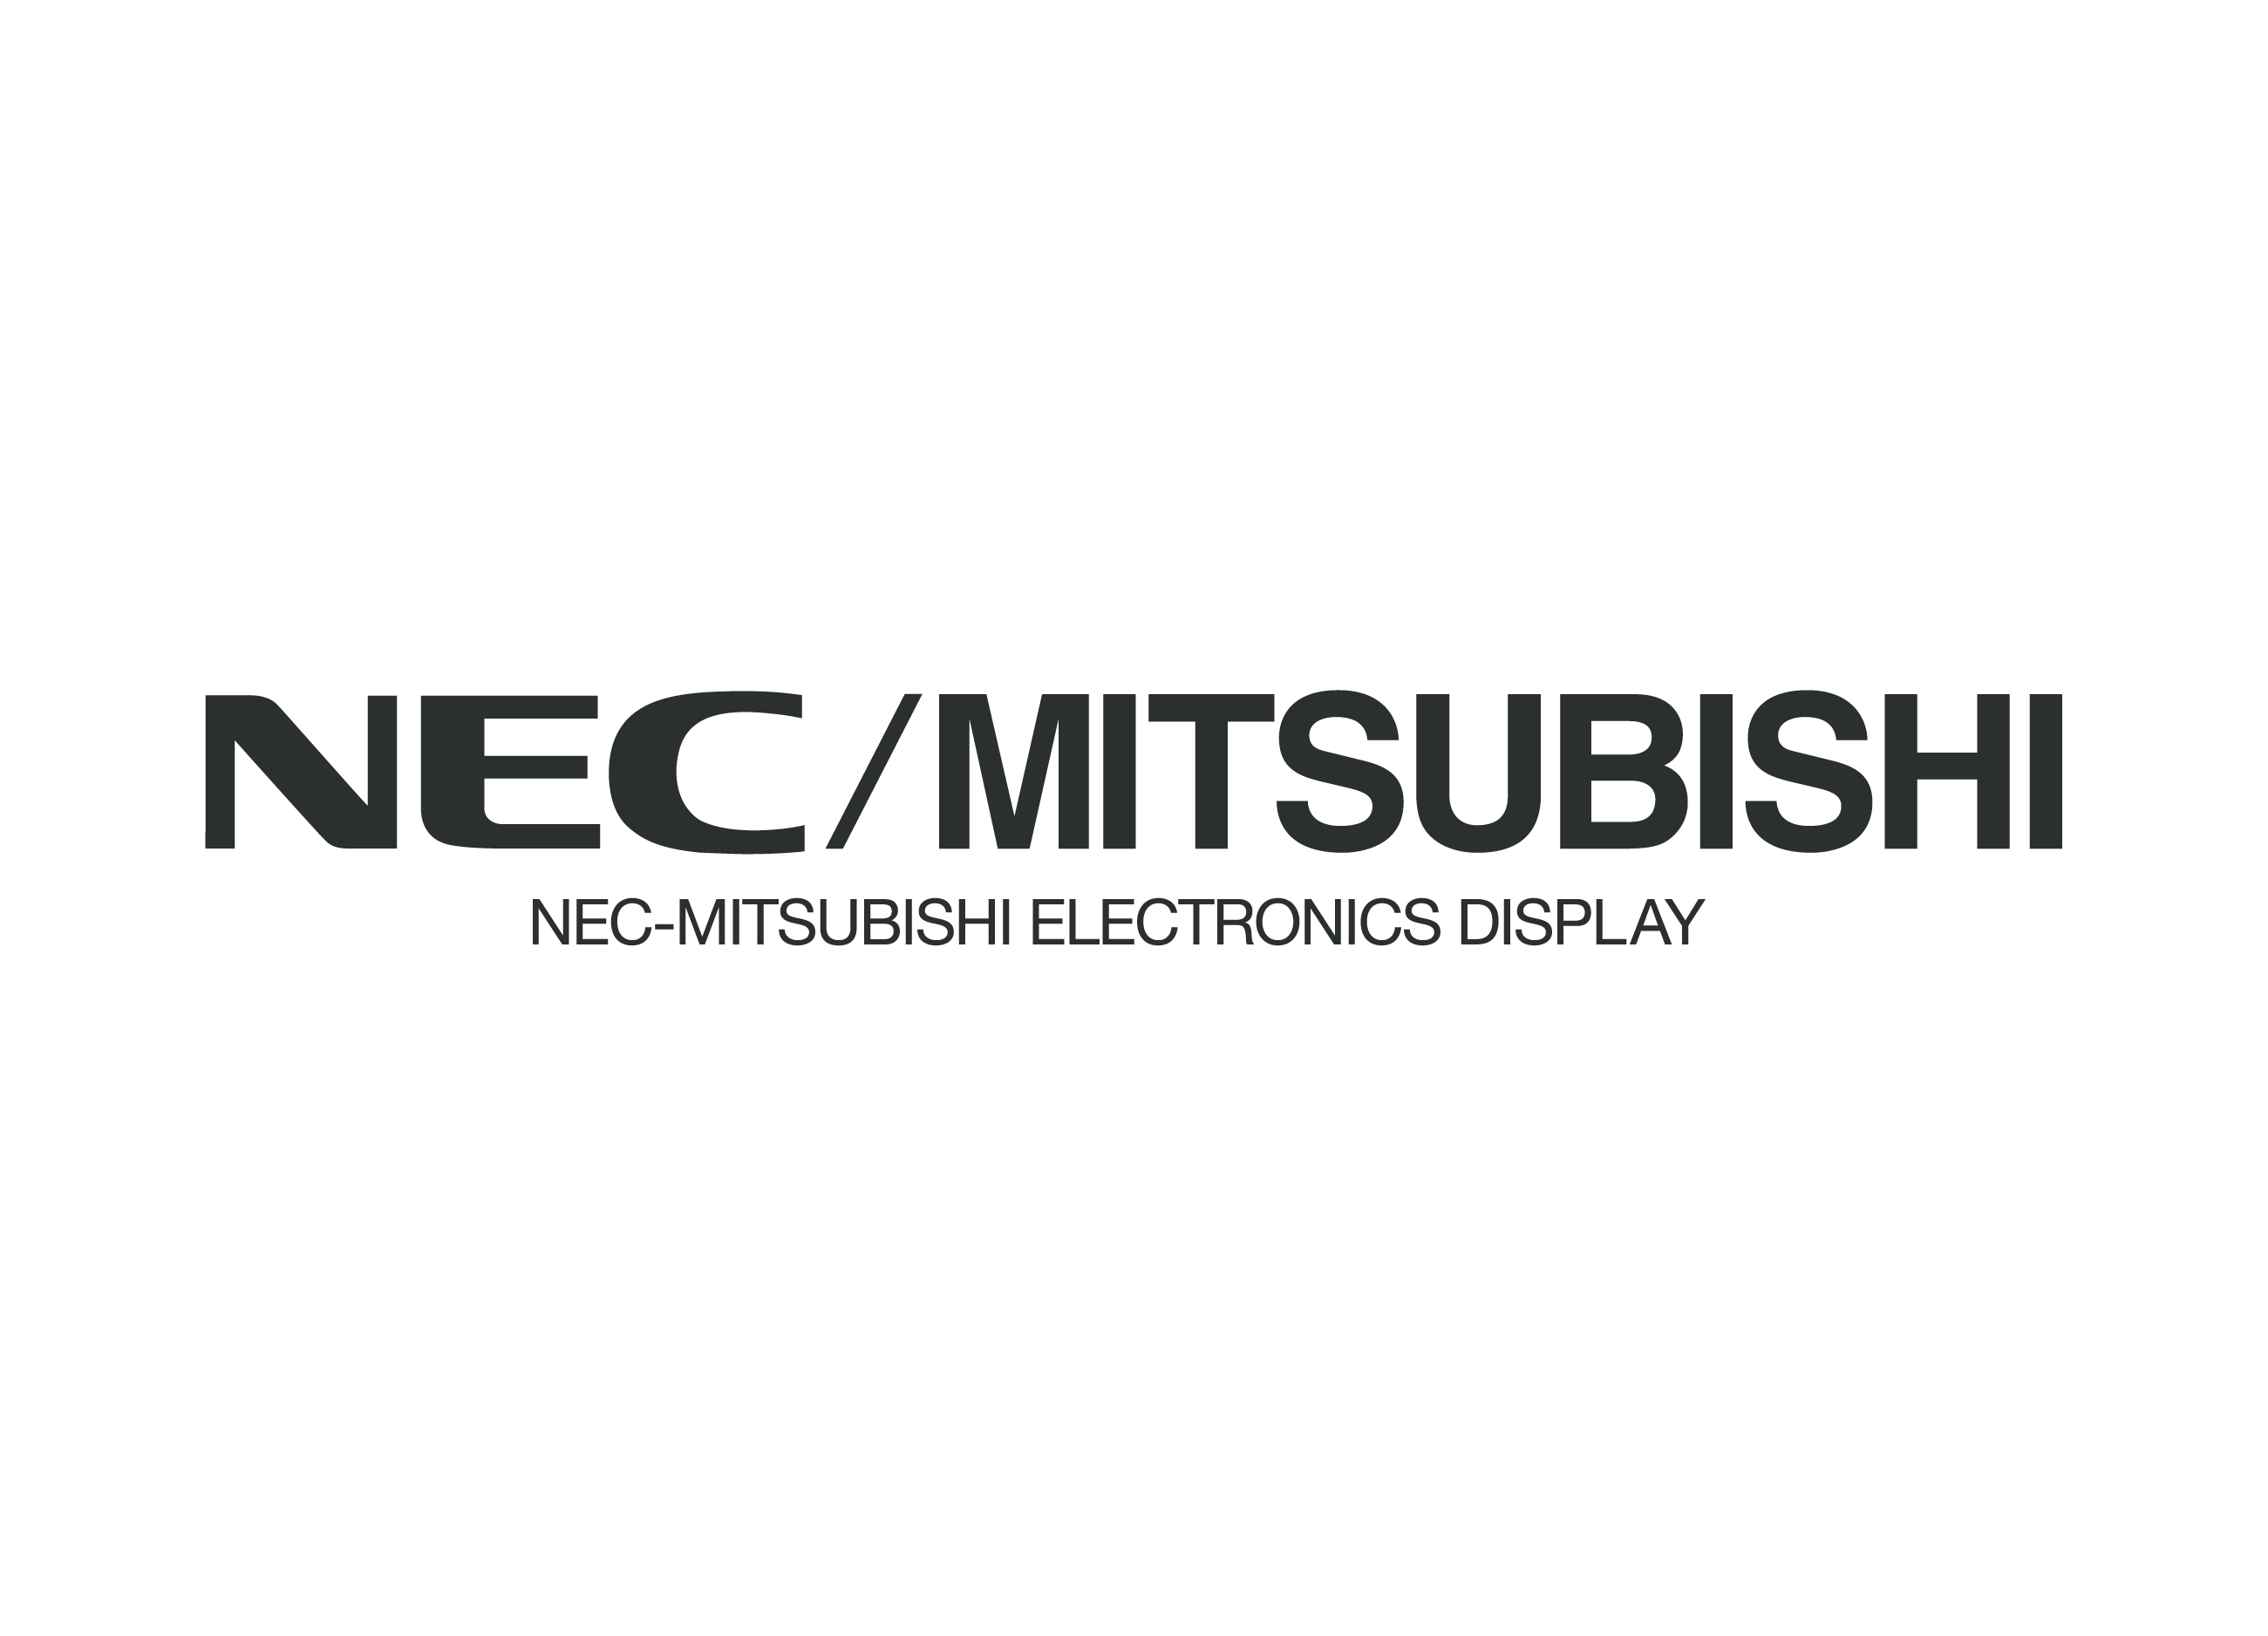 NEC/MITSUBISHI